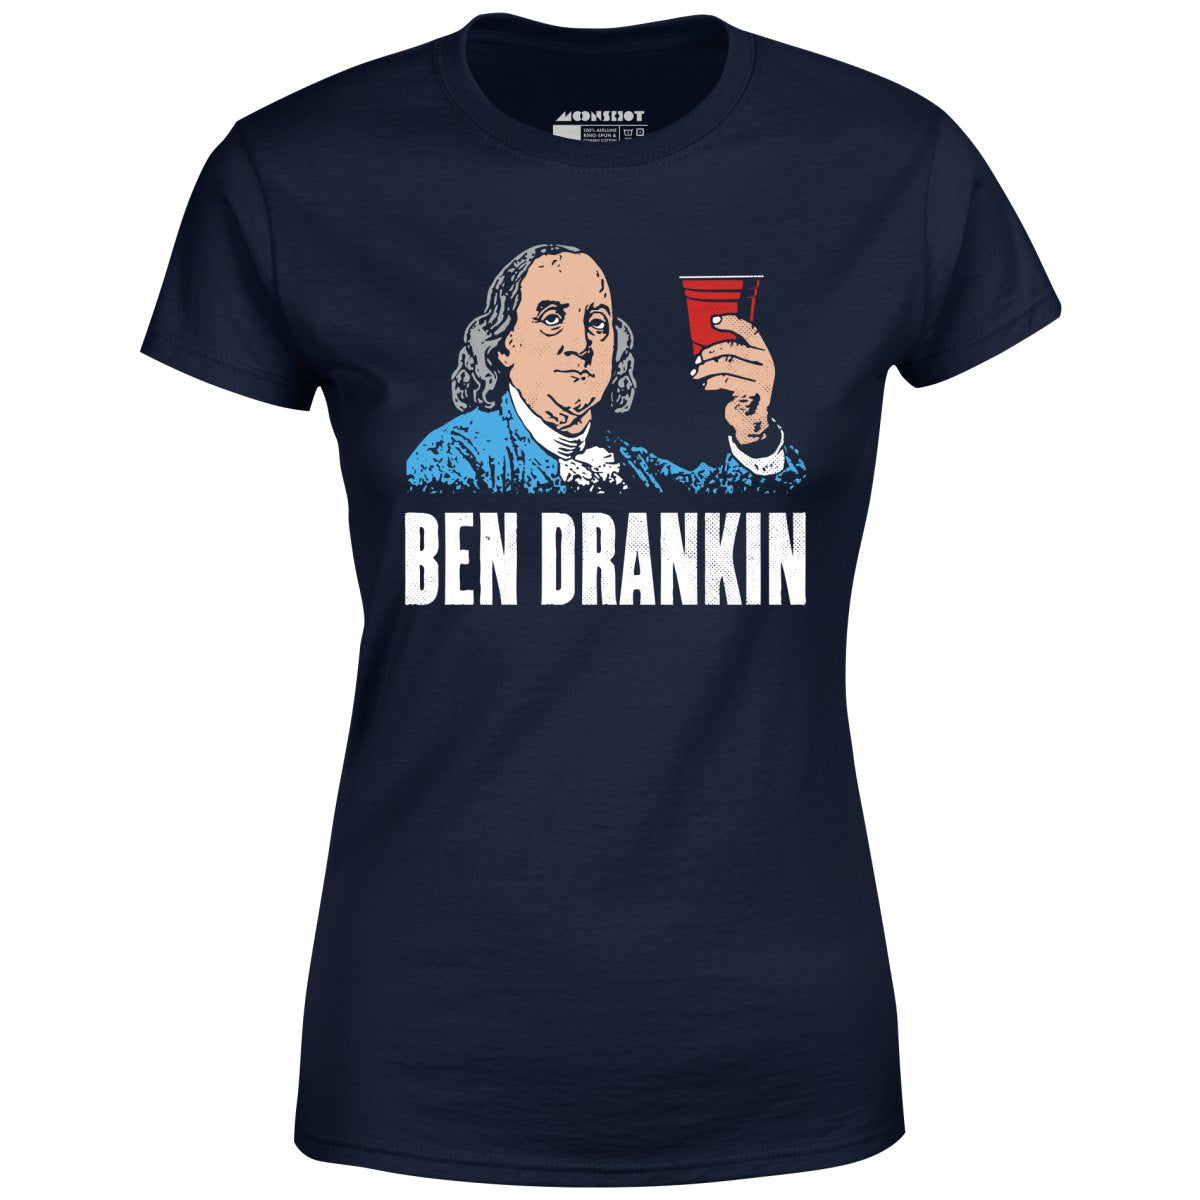 Ben Drankin - Women's T-Shirt